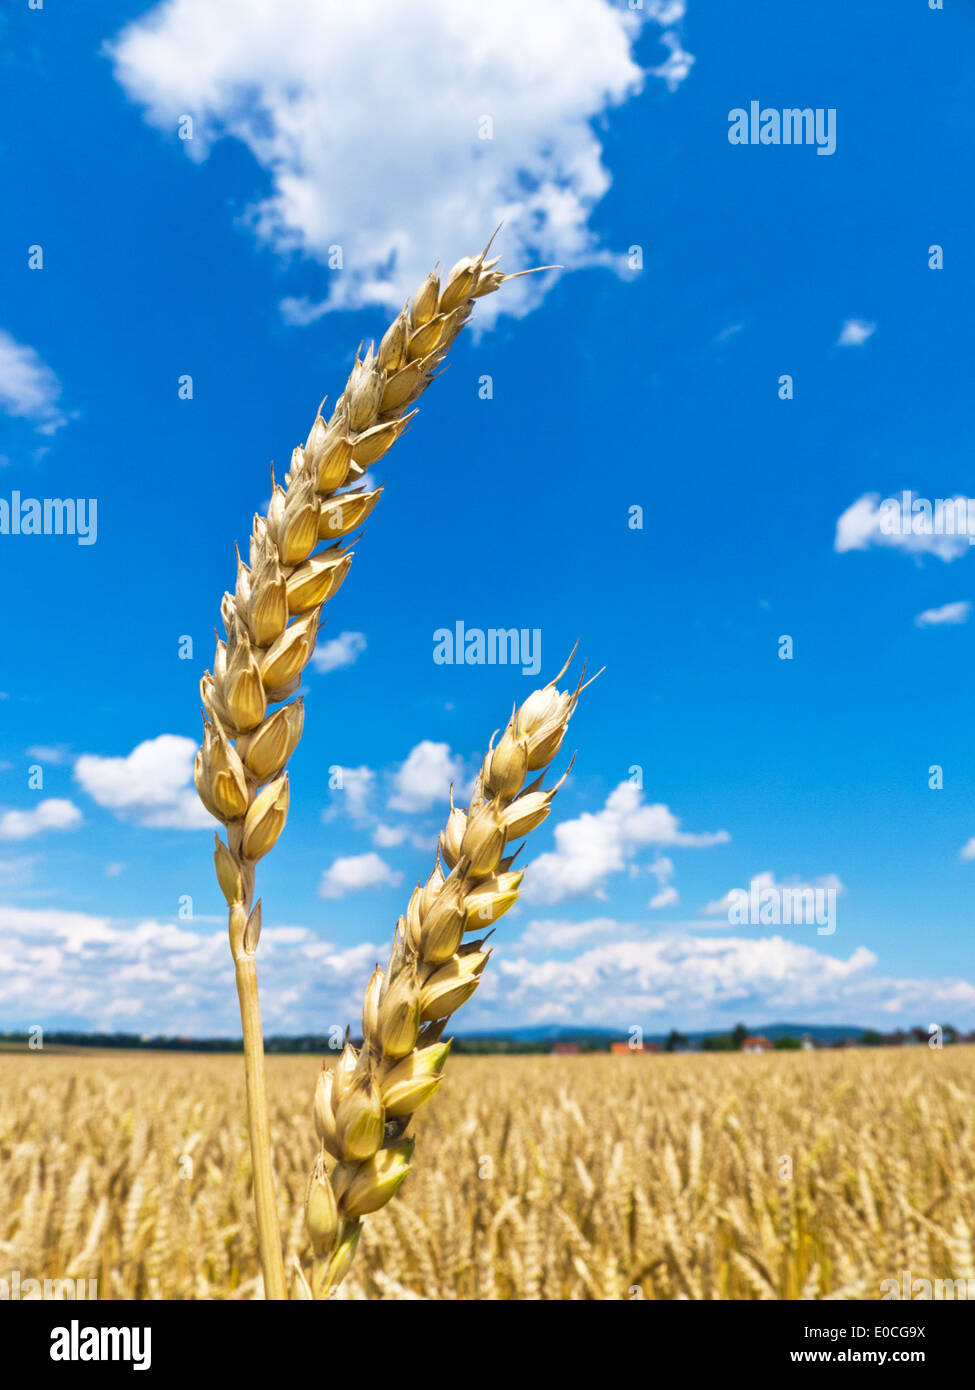 Les oreilles d'orge sur un grain-champ d'un agriculteur de l'été., von aehren Gerste und auf einem Getreidefeld Bauern im Sommer. Banque D'Images